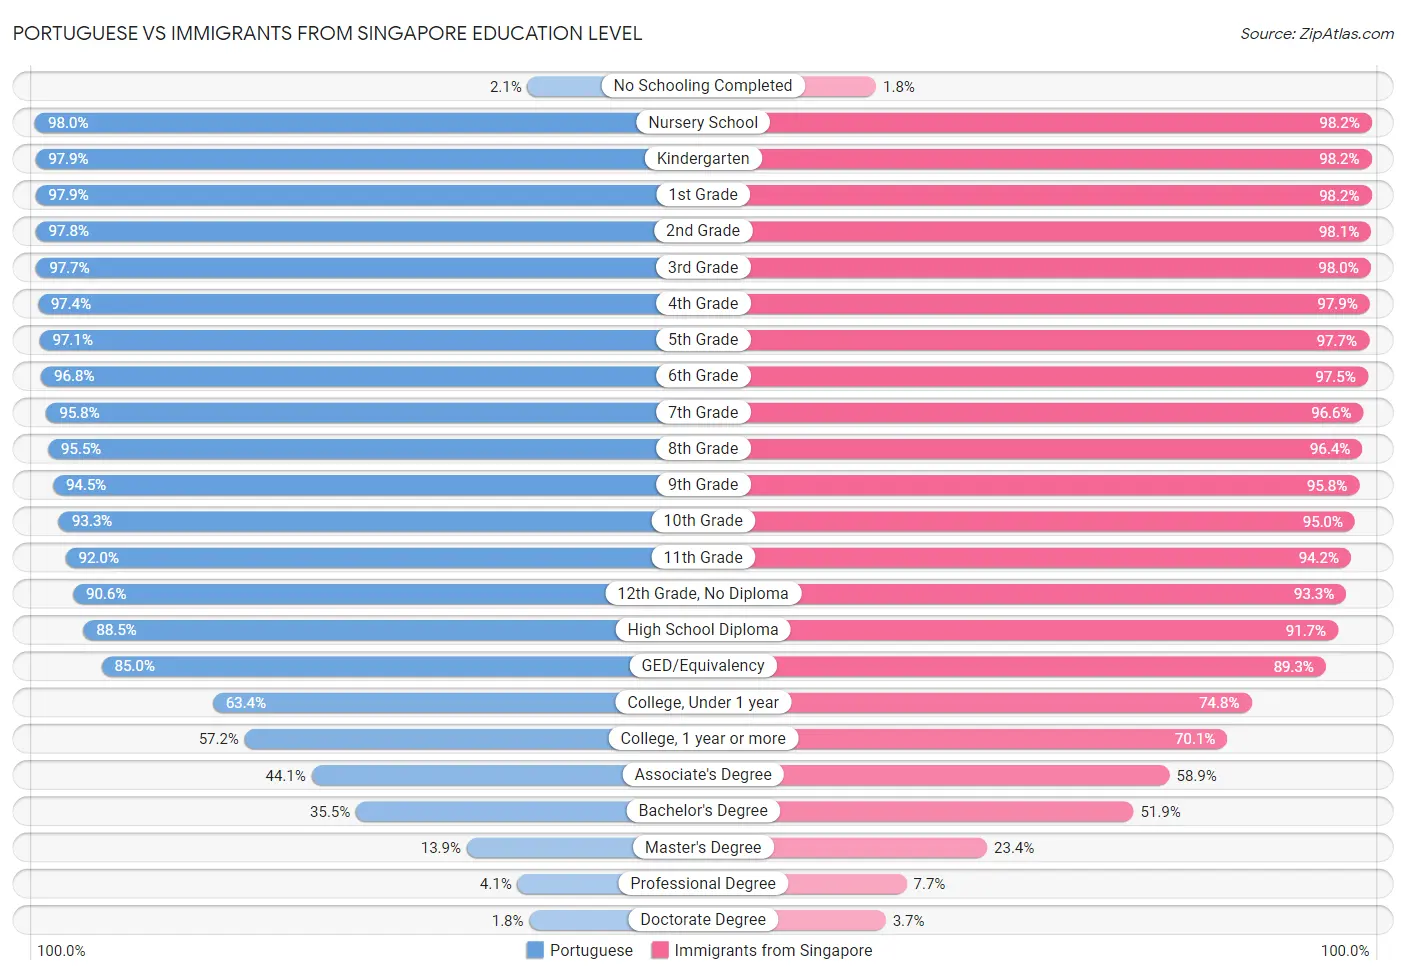 Portuguese vs Immigrants from Singapore Education Level